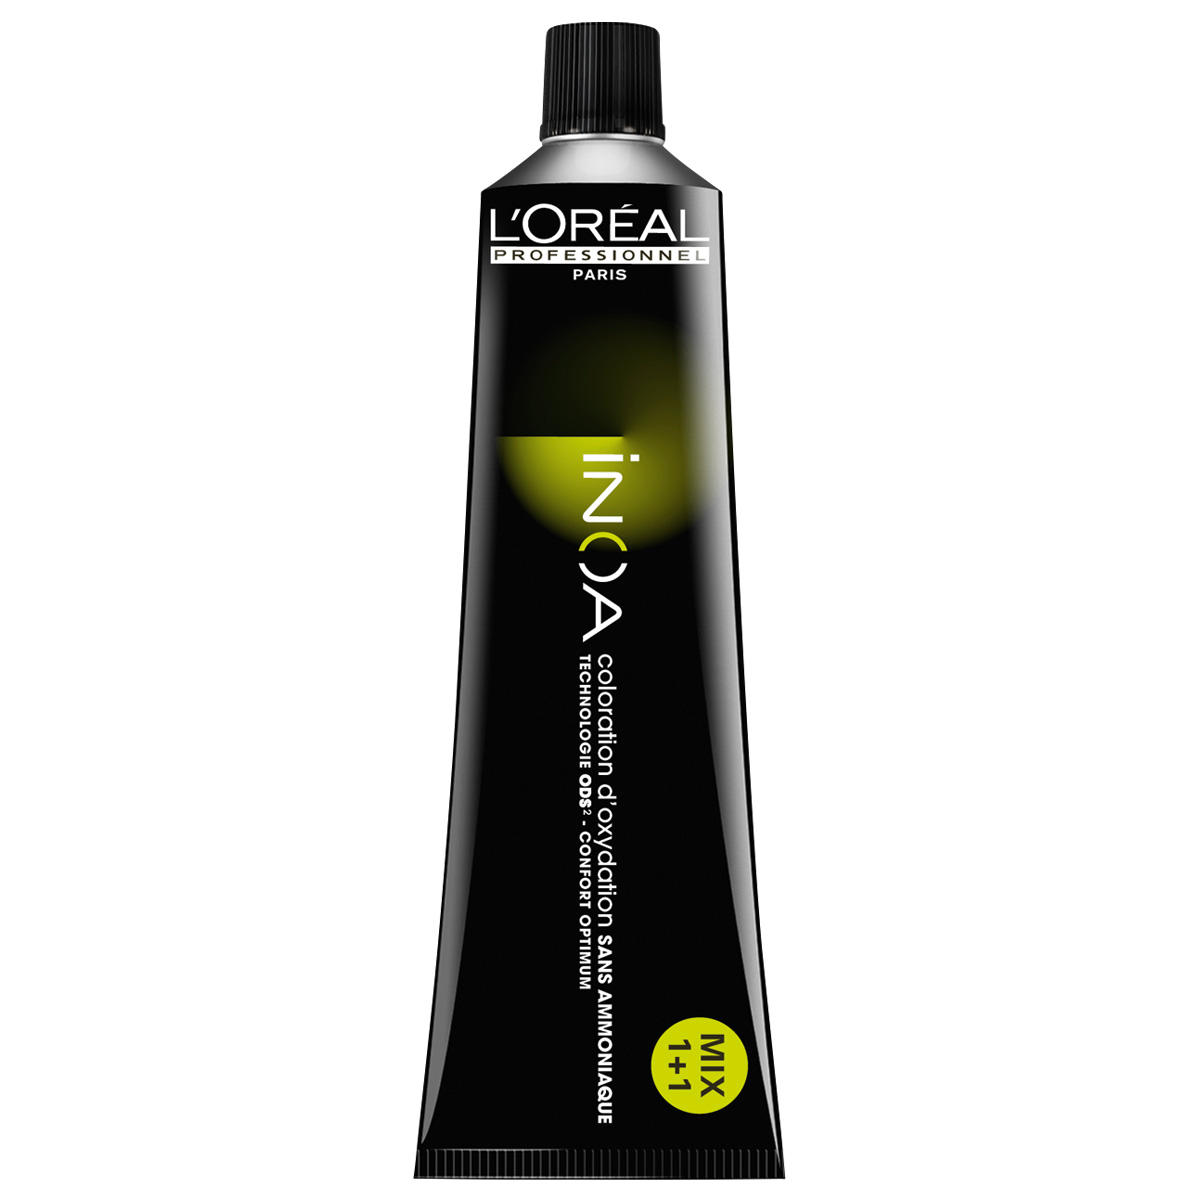 L'Oréal Professionnel Paris Coloration 4.0 Marrón Medio Intensivo, tubo 60 ml - 1